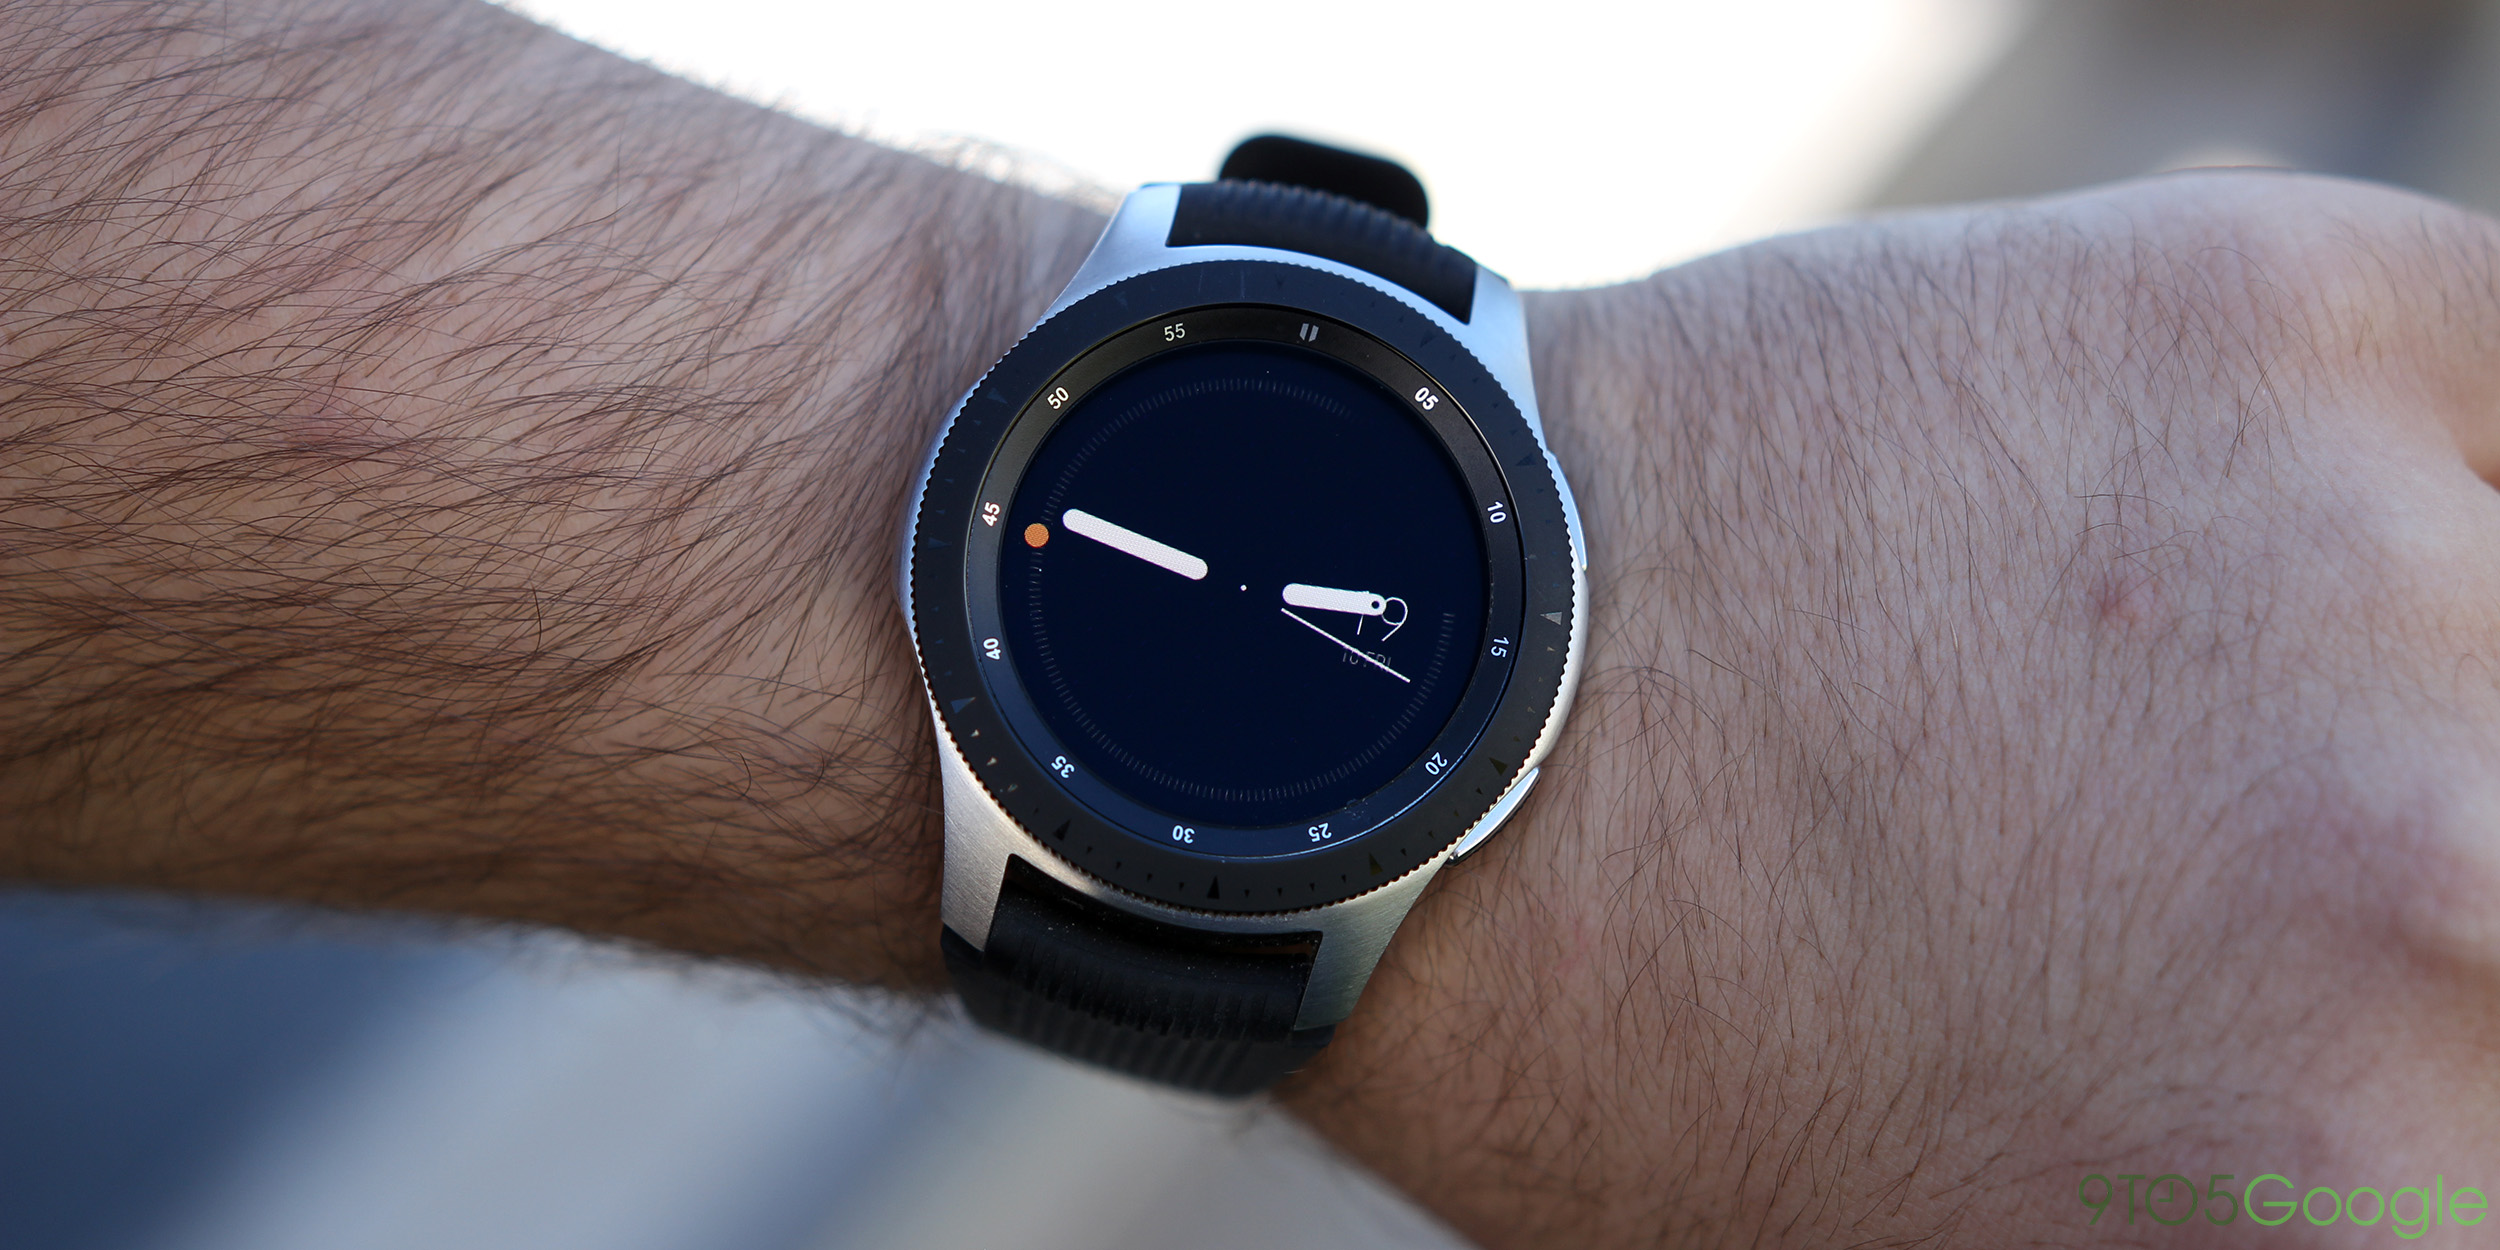 Latest Galaxy Watch update improves 